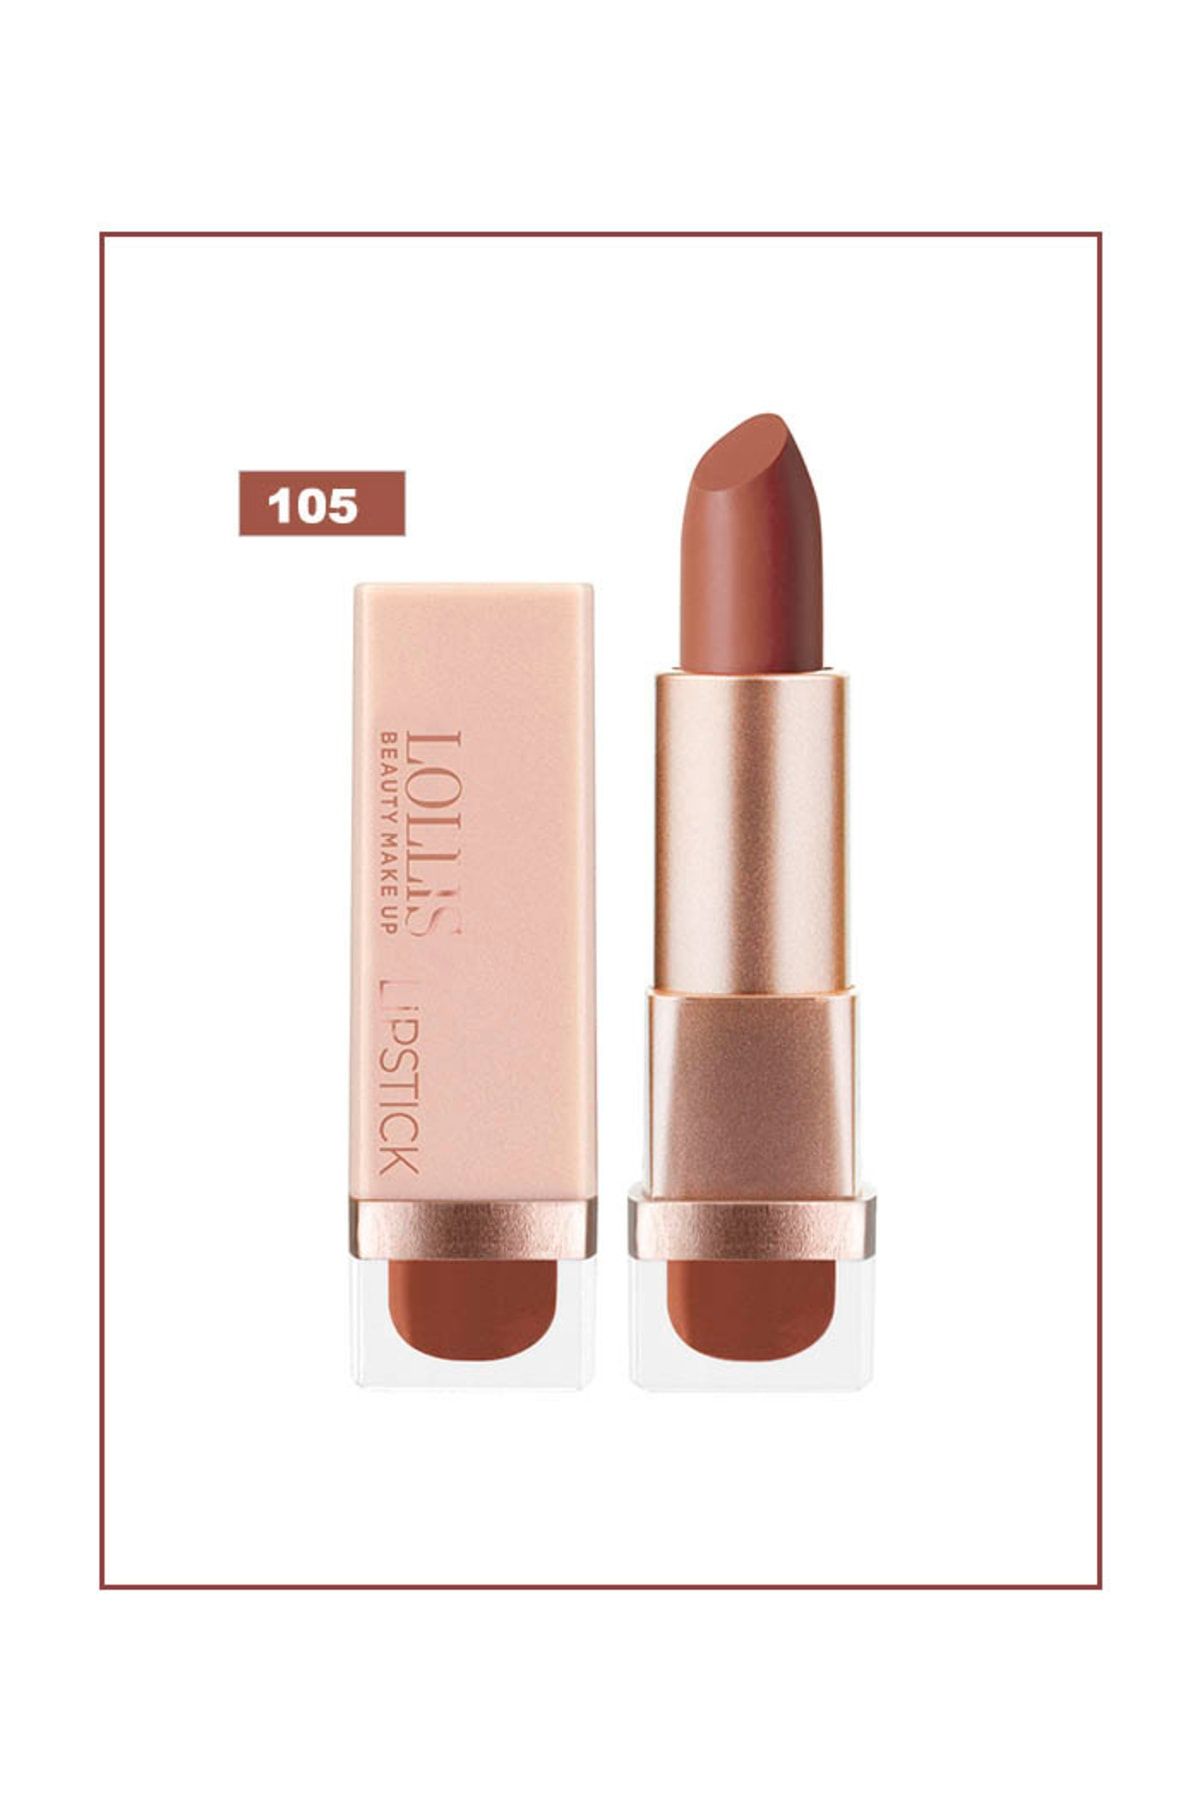 Lollis Lipstick 105 / Ruj 105